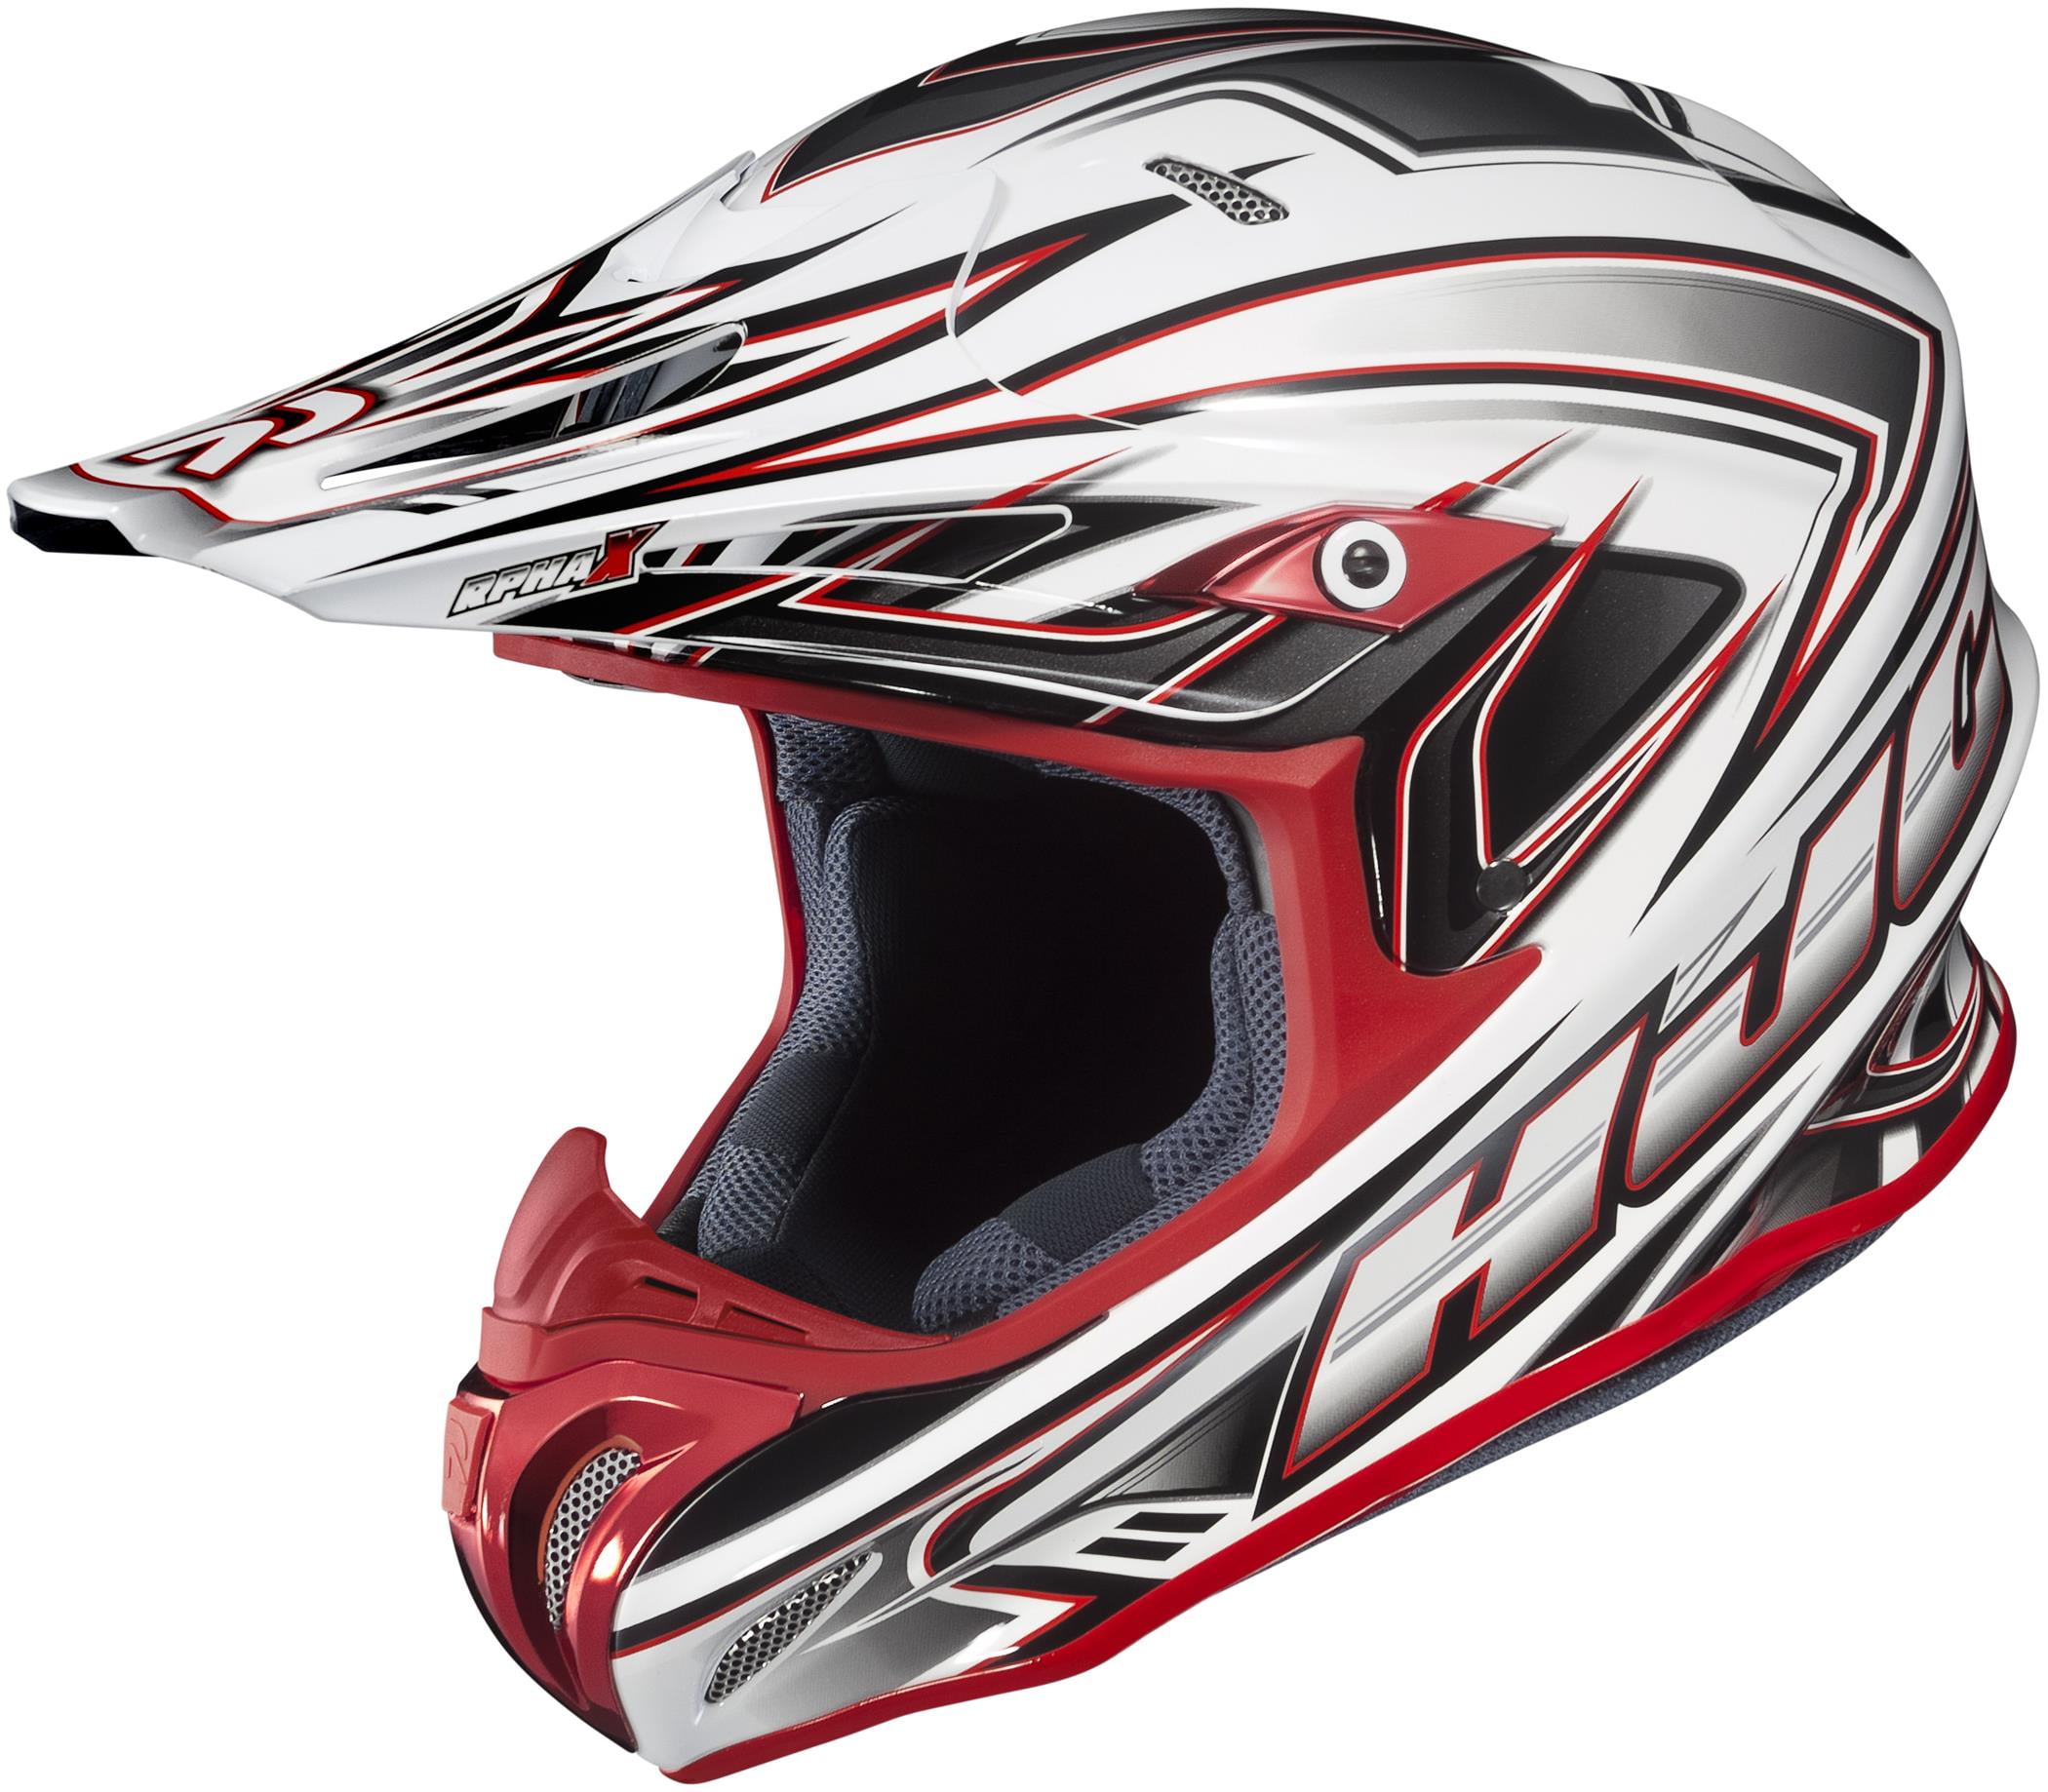 HJC Helmets Airaid MC-1 Graphic RPHA X Off-Road Helmet Red/Silver/White, X-Large